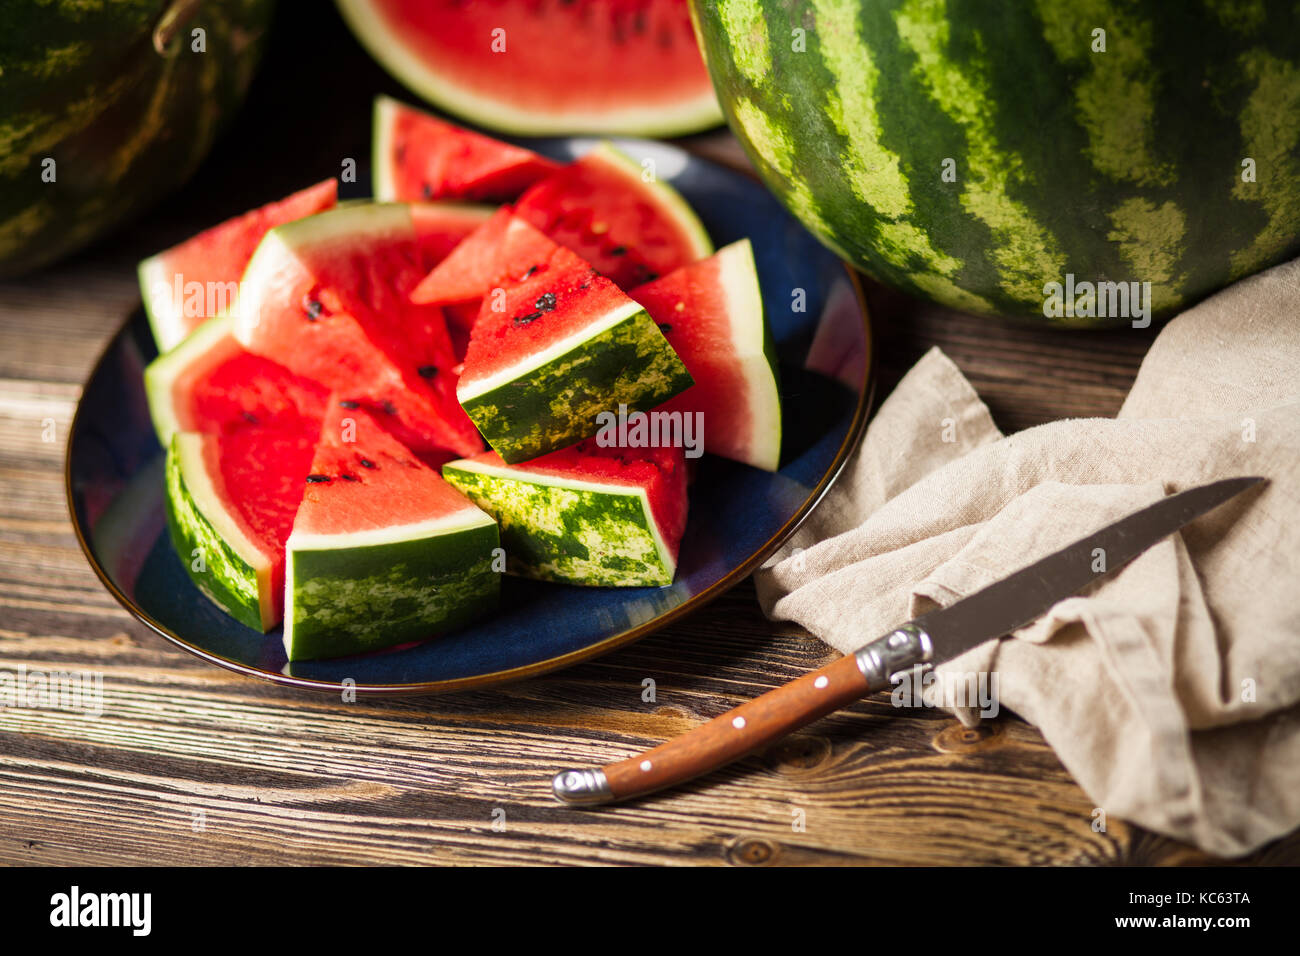 Ripe juicy watermelons Stock Photo